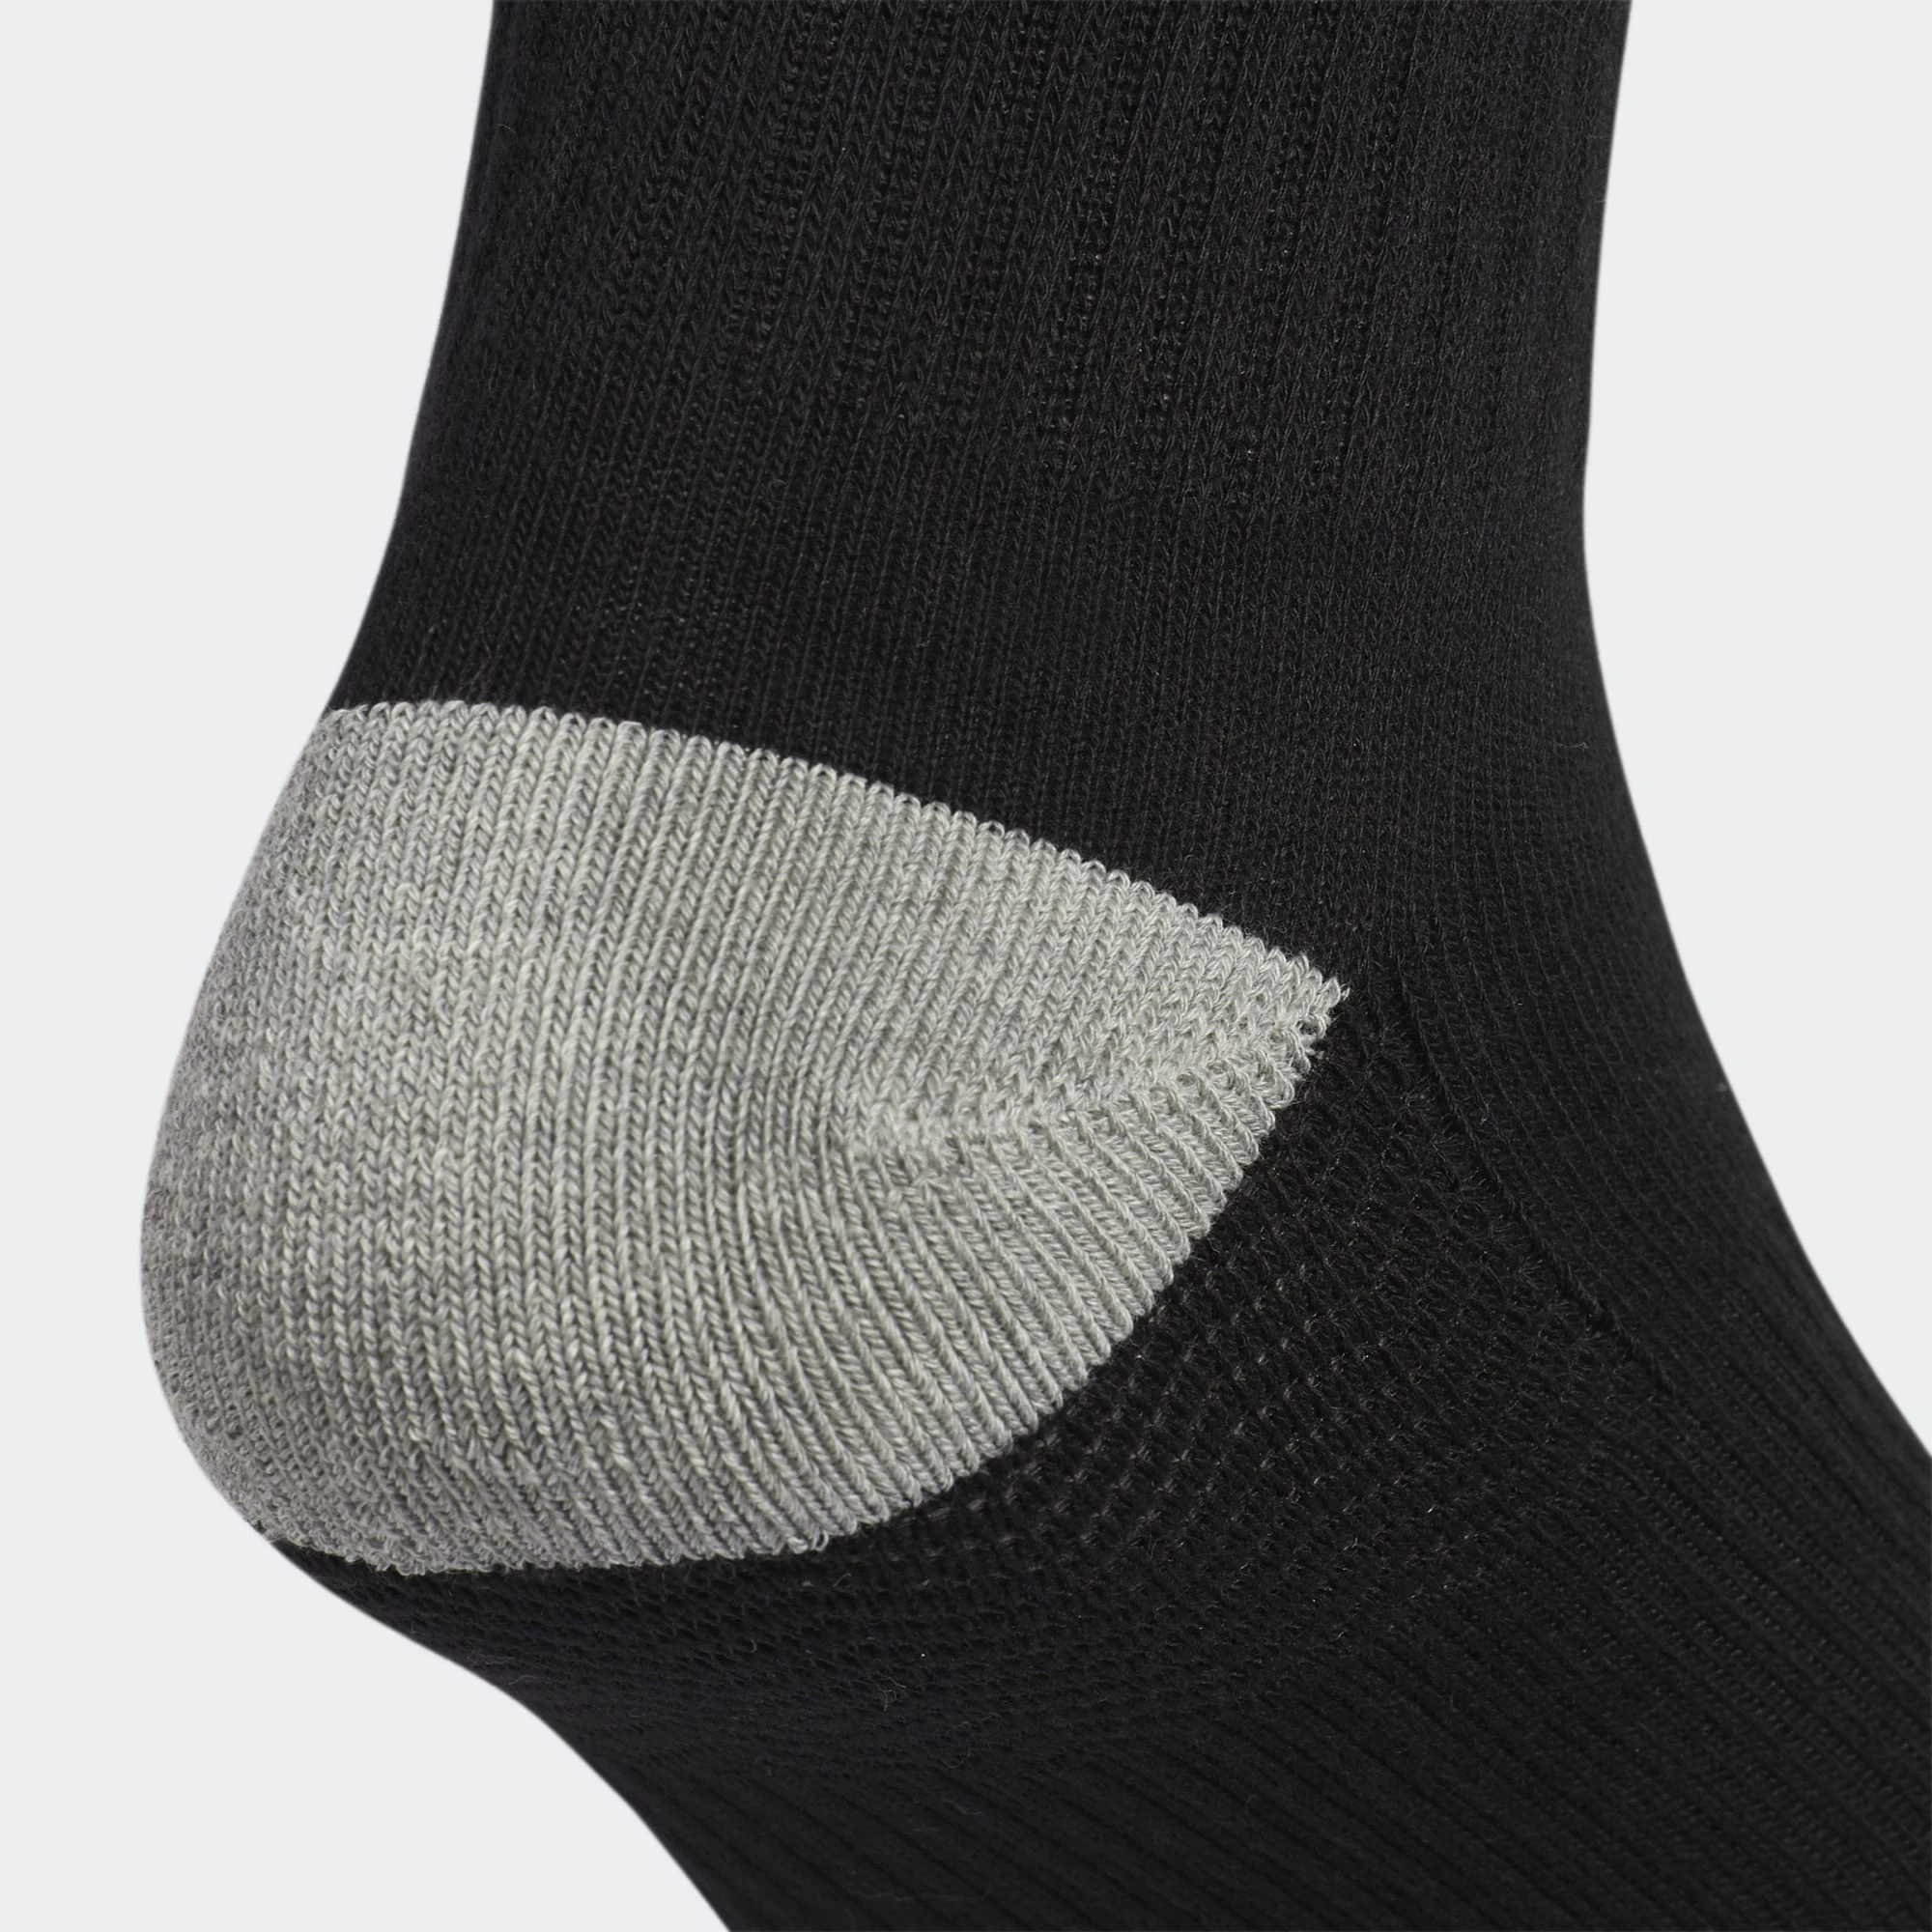 Uron 2021 high quality custom socks logo socks